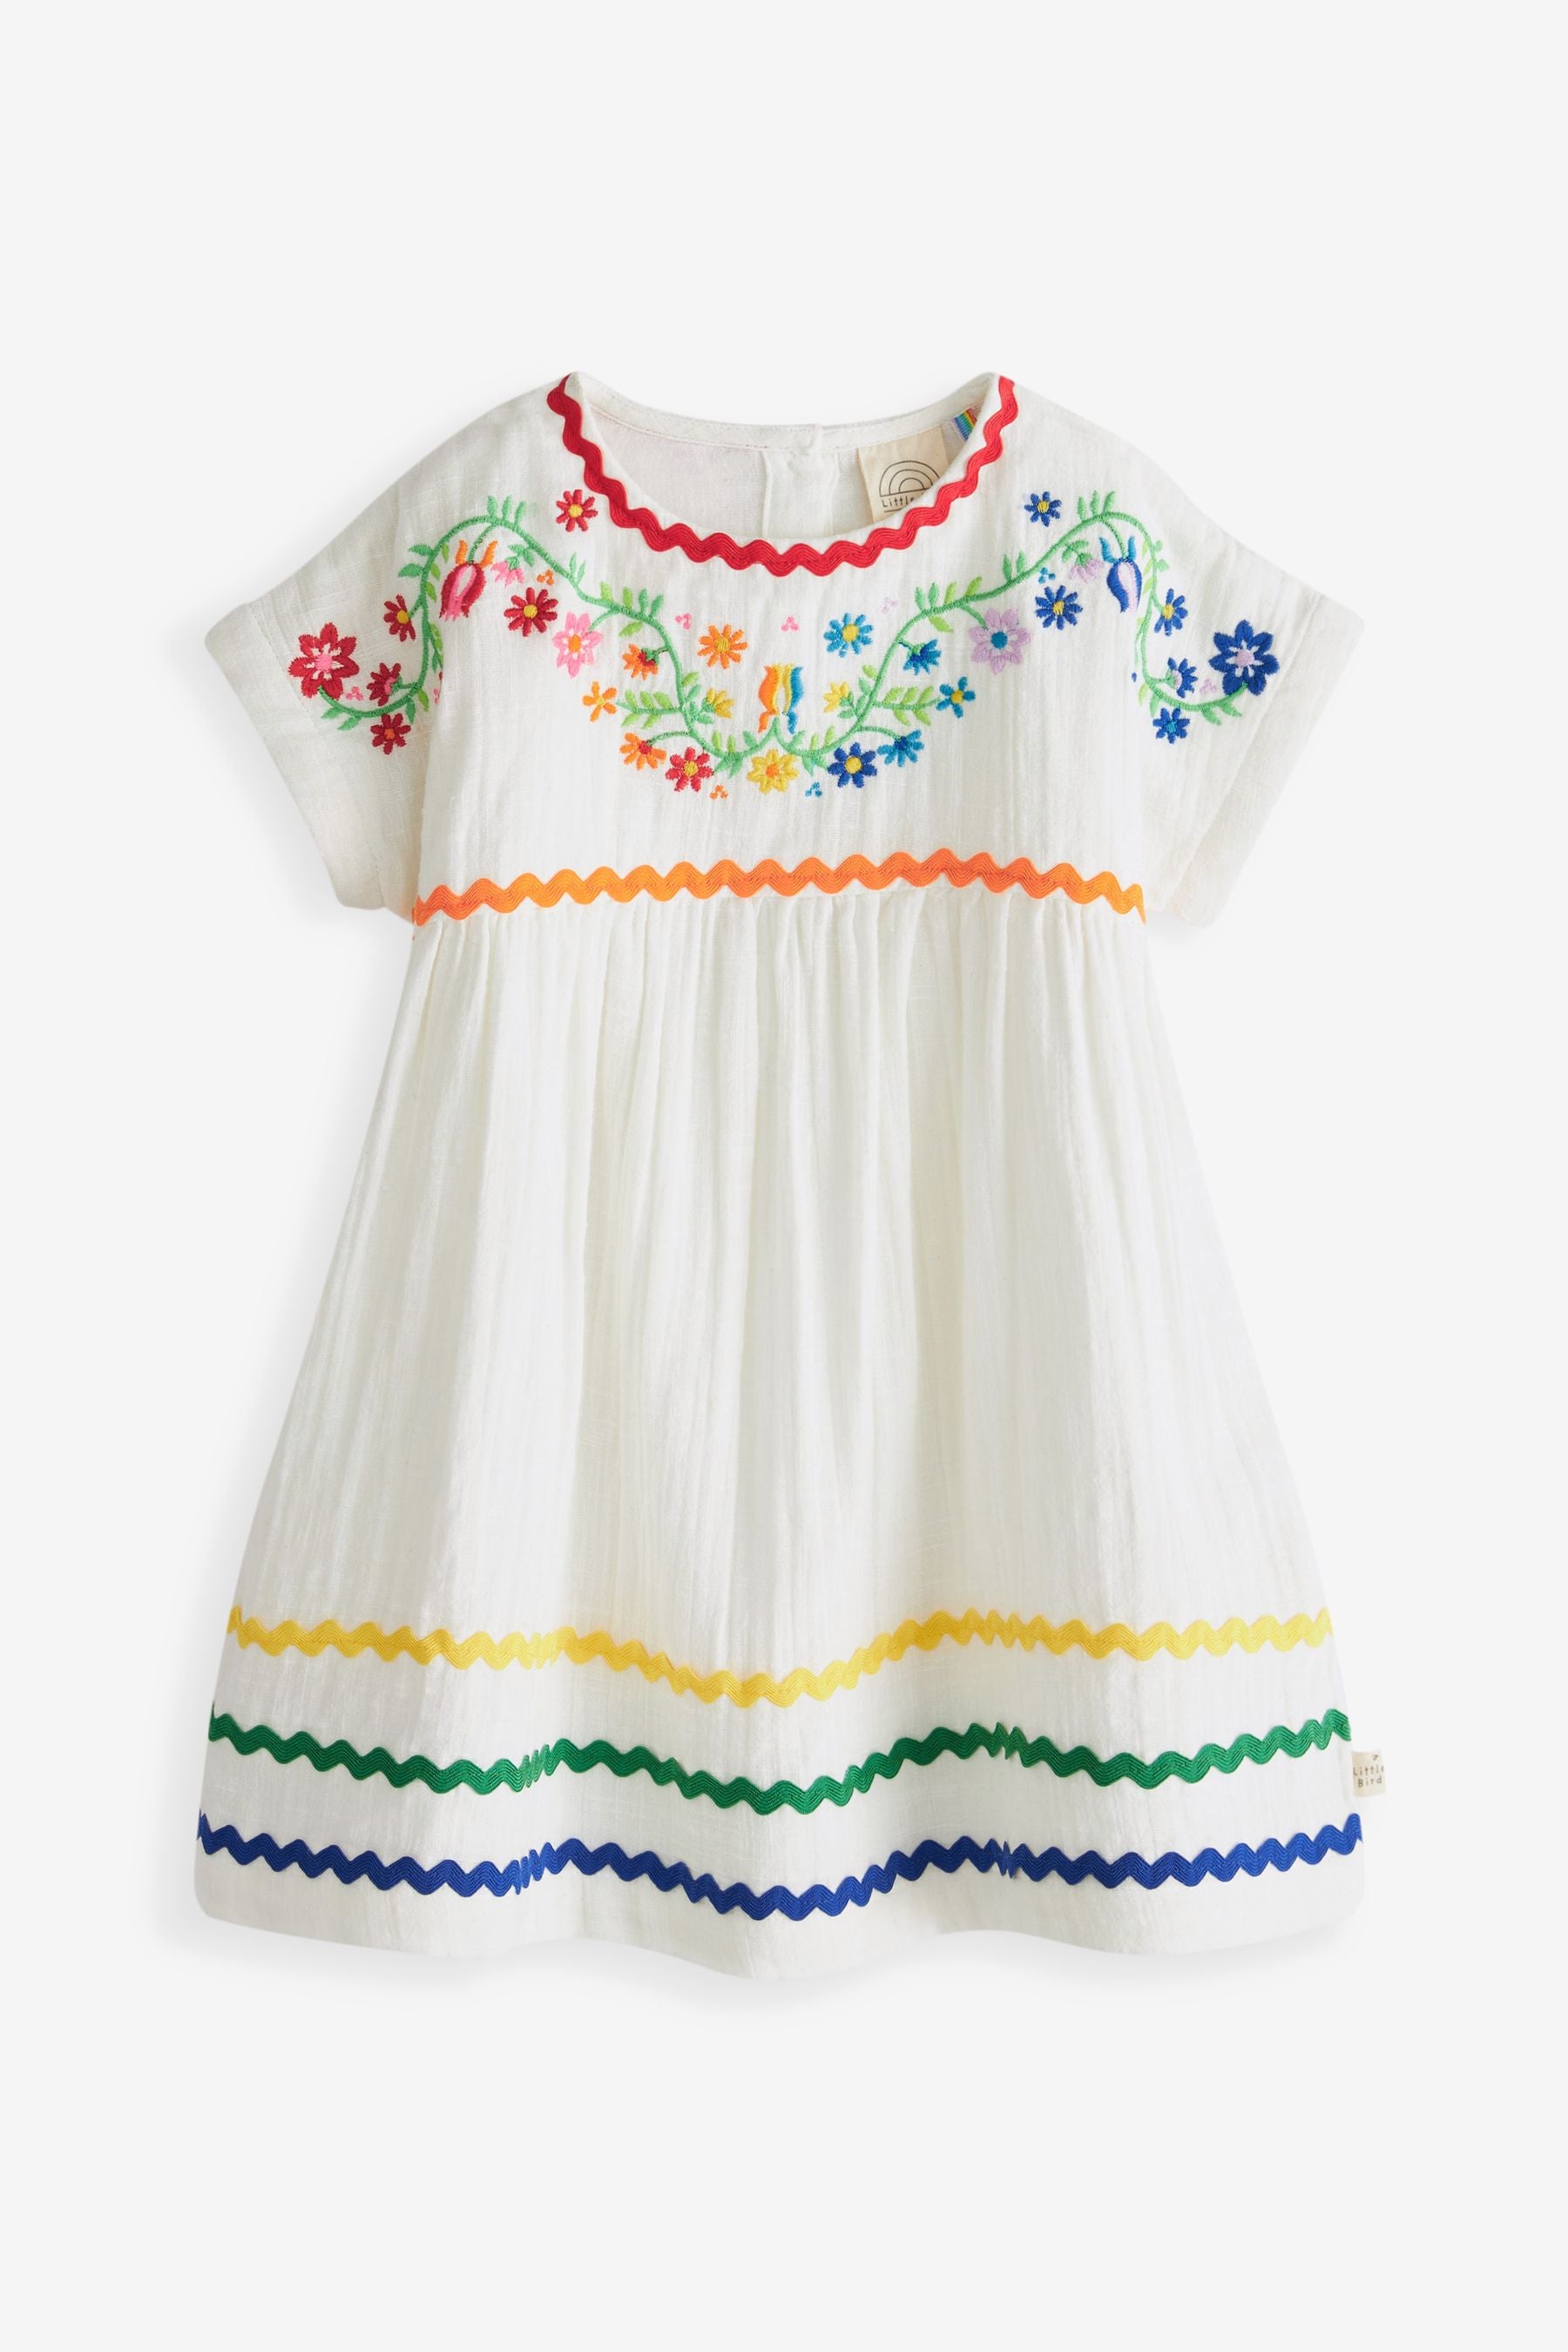 Jools Oliver Little Bird Ecru Floral Embroidered Dress